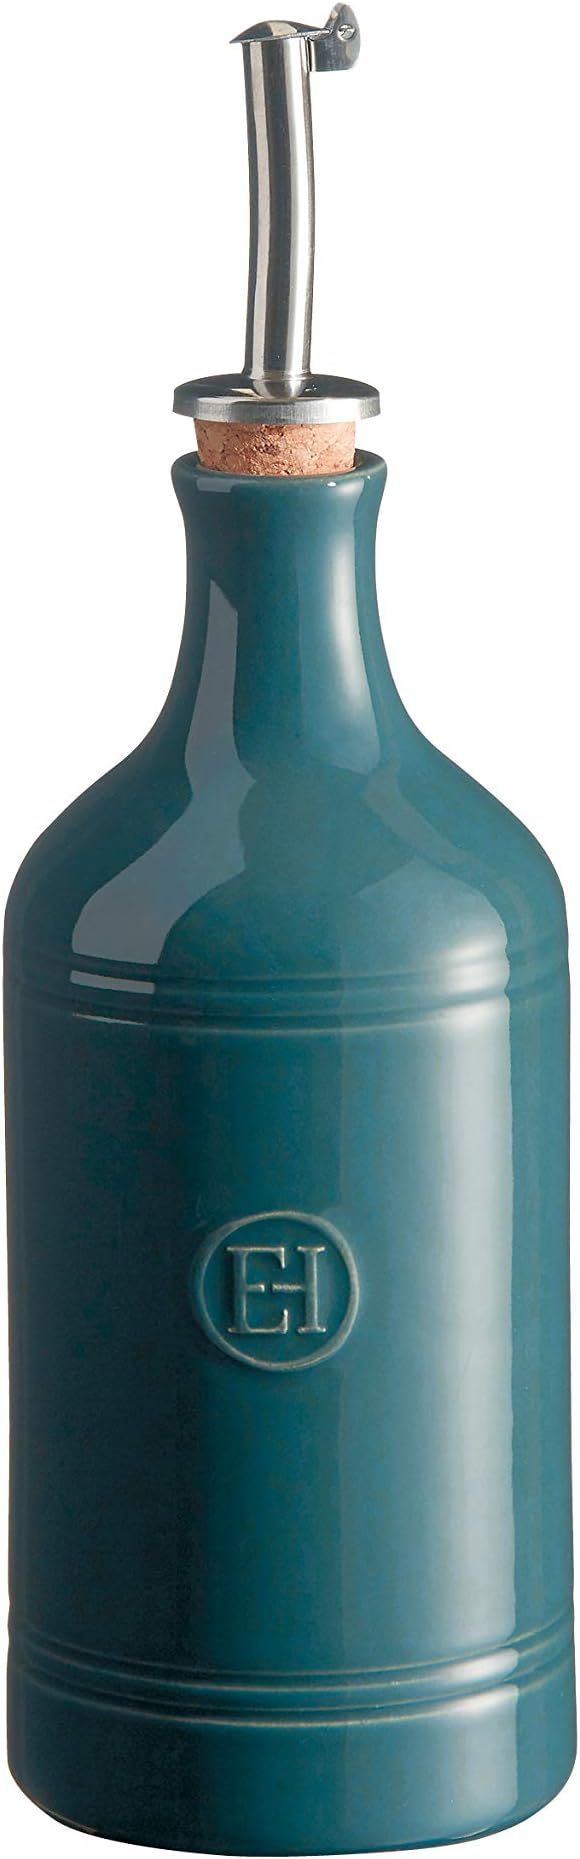 Emile Henry Made In France Oil Bottle,Blue Flame | Amazon (US)